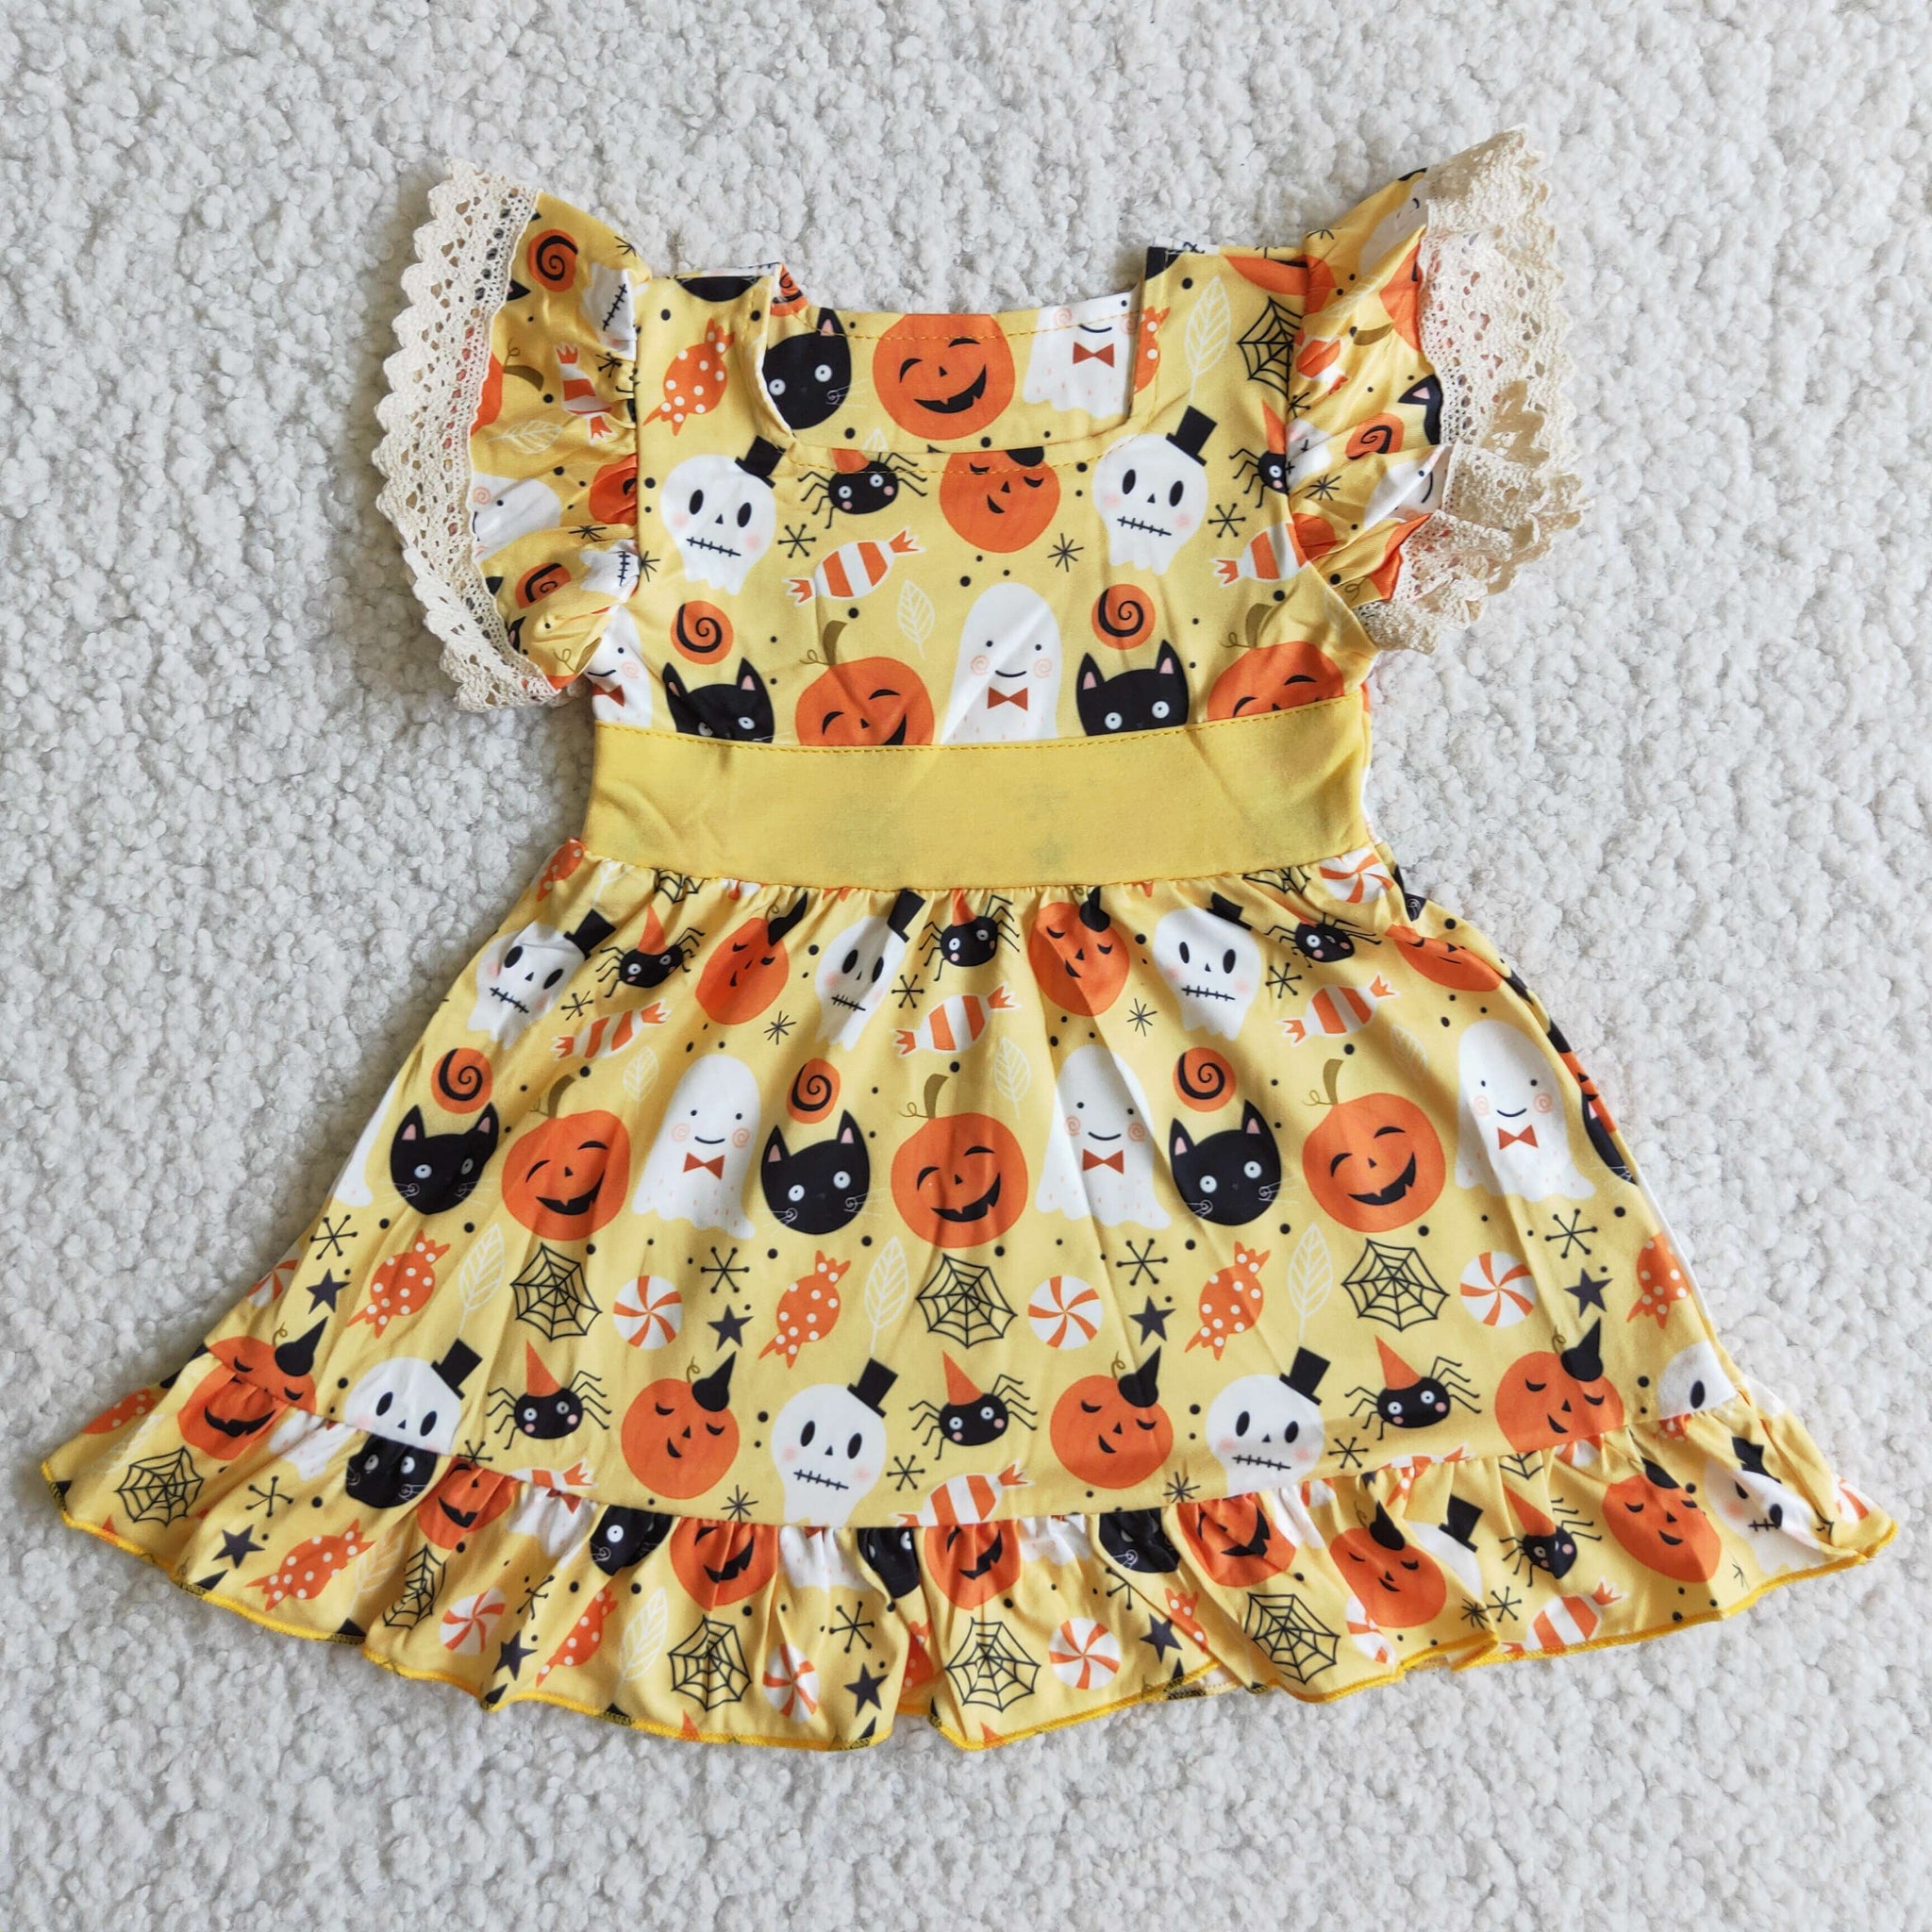 B10-9 orange pumpkin lace girls dresses toddler halloween costume